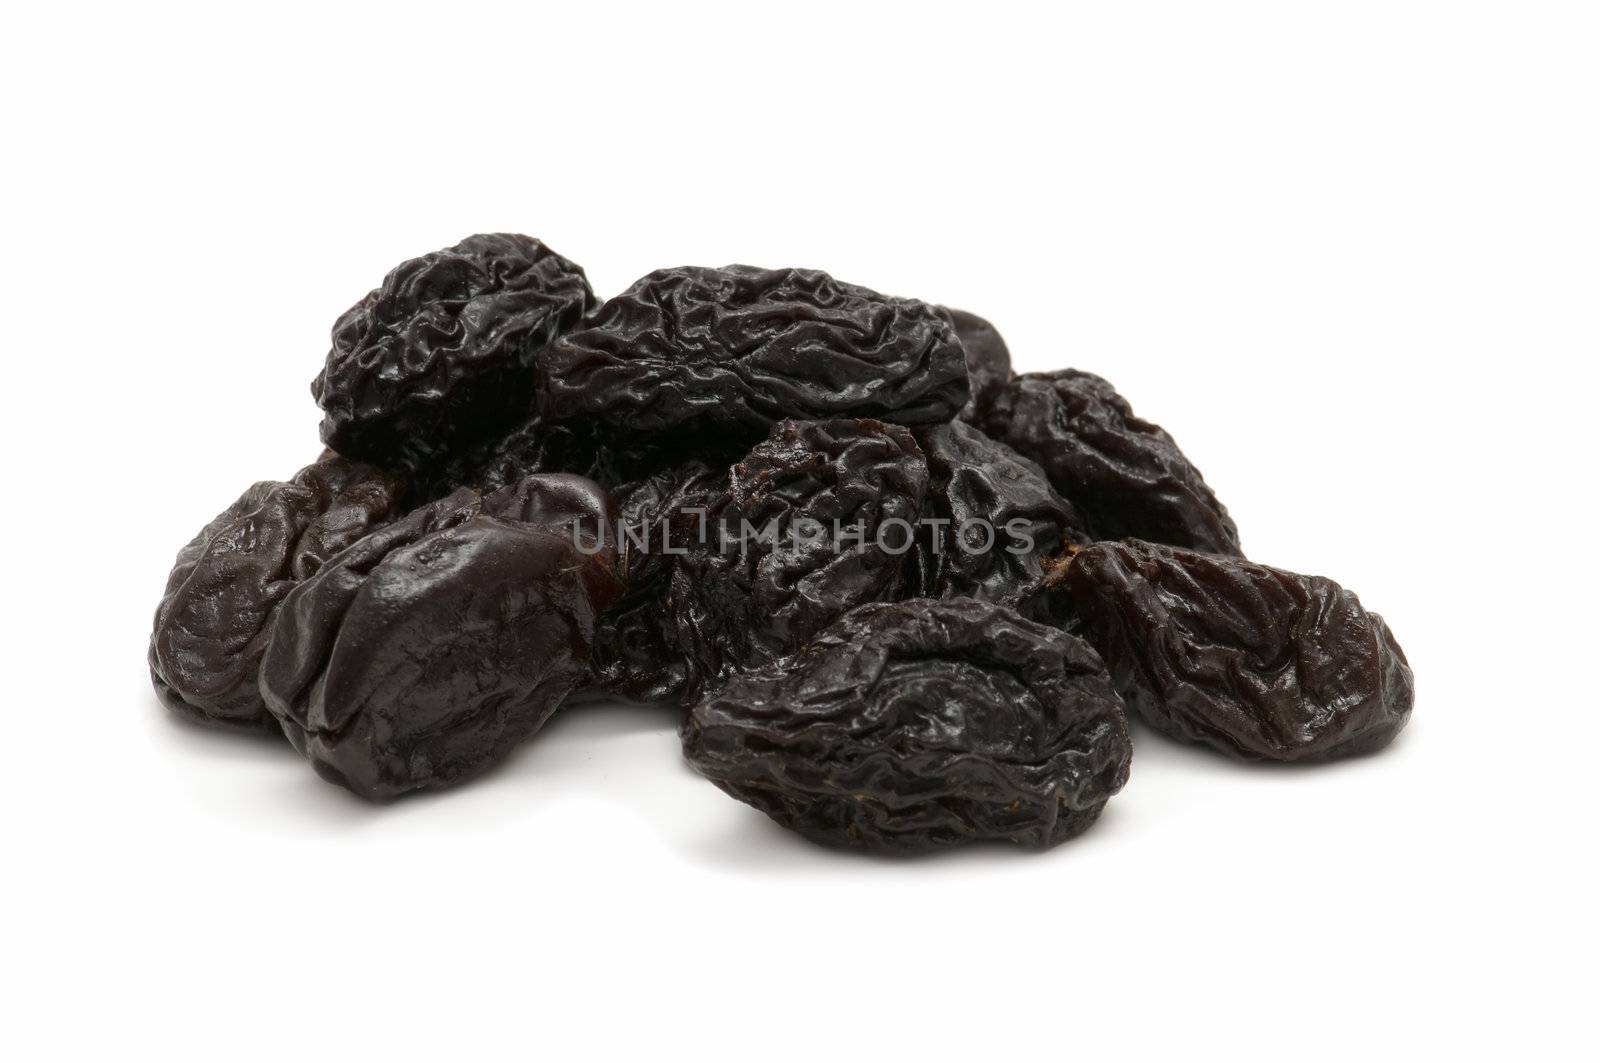 handful of raisins by luiscar